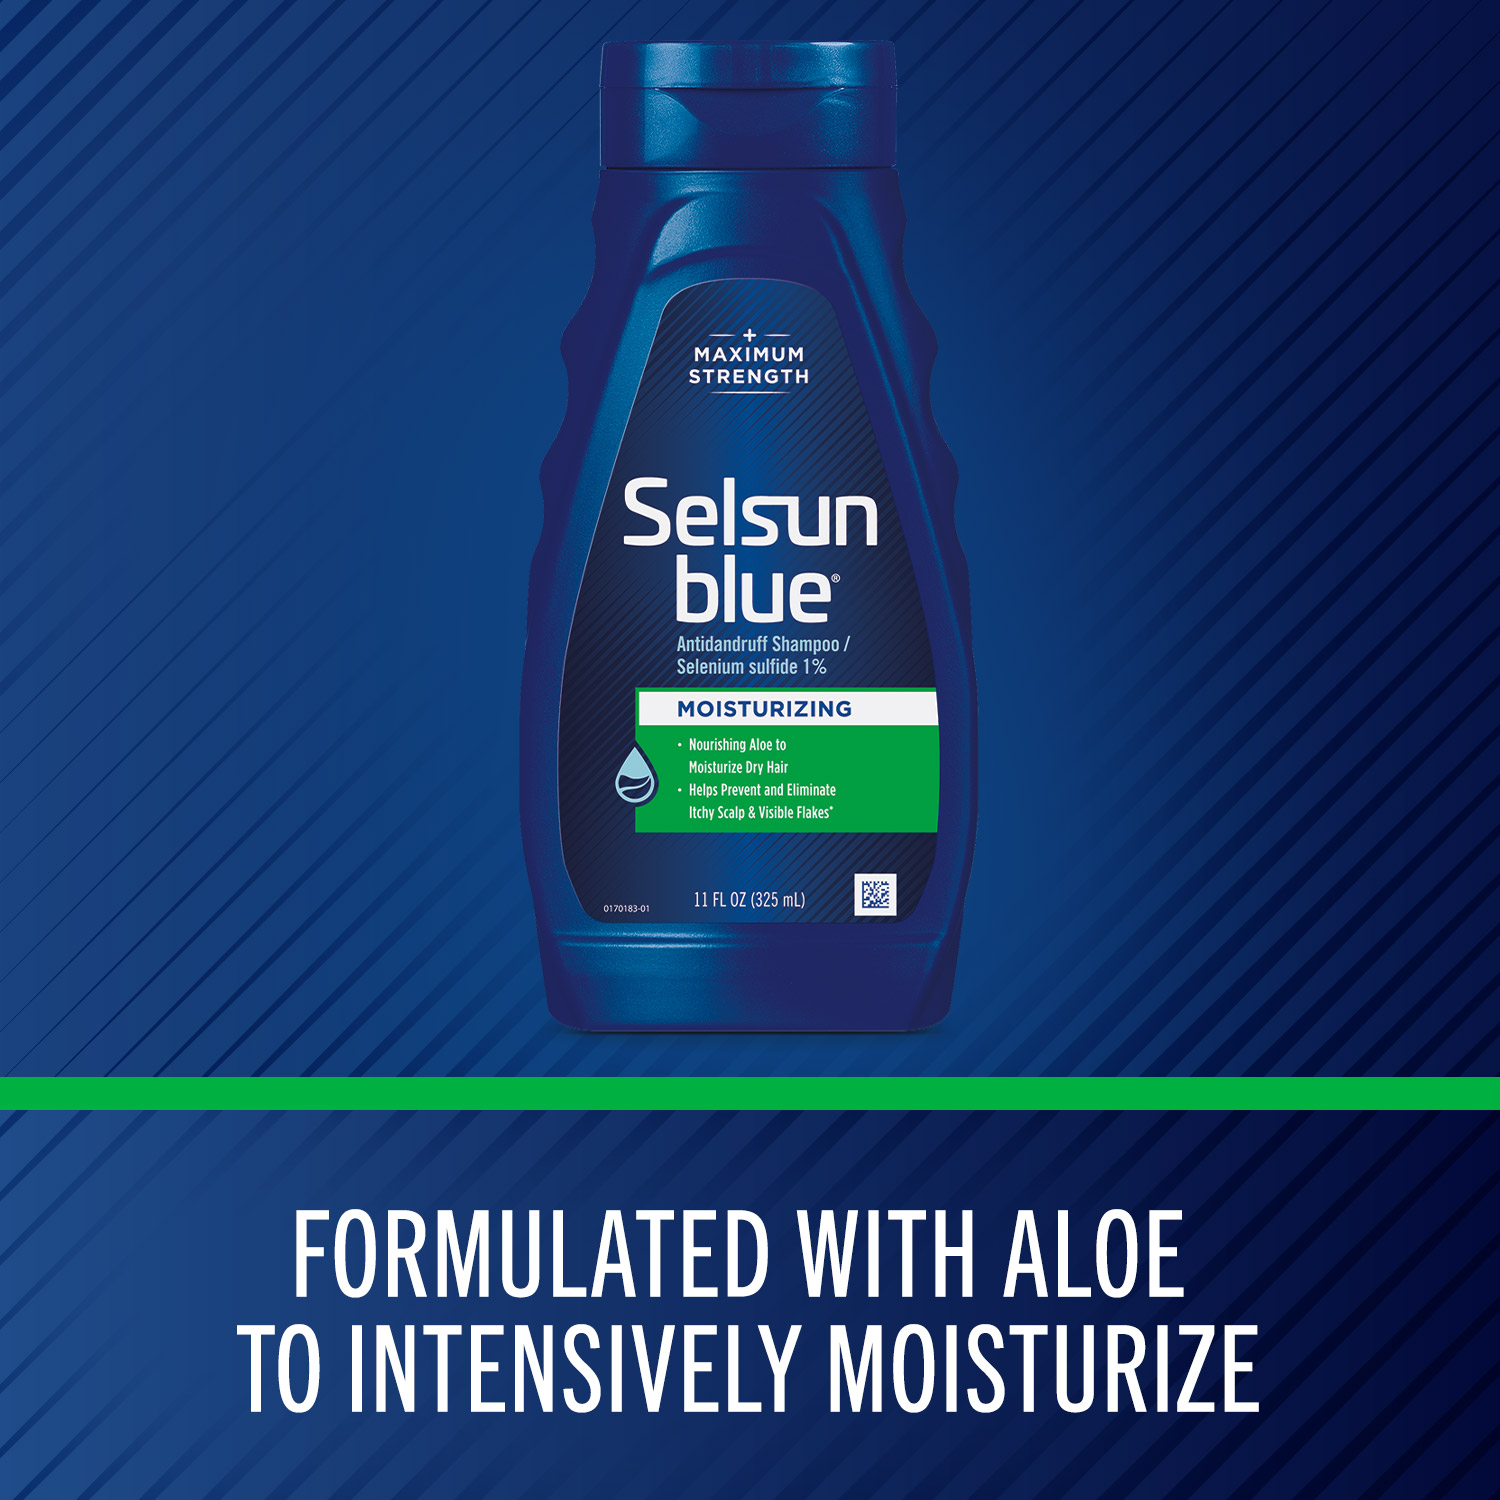 Selsun Blue Men's Moisturizing Anti-Dandruff Shampoo for Itchy and Dry Scalp Relief, Maximum Strength, 1% Selenium Sulfide, 11 fl oz - image 3 of 8